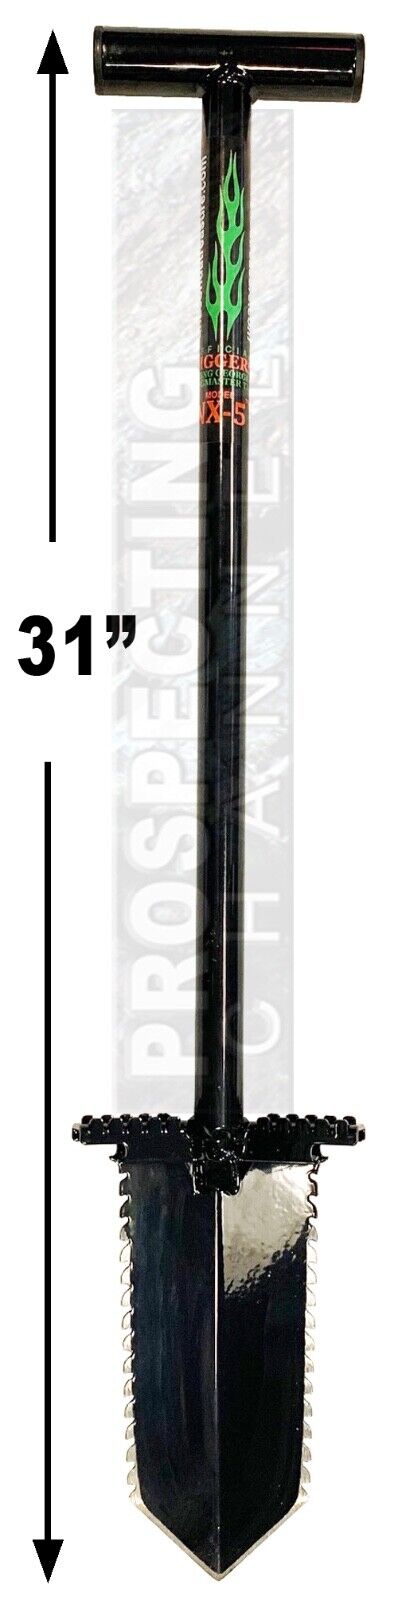 31" NX-5 ANACONDA T-Handel Double Serrated Metal Detecting Dig Trowel Shovel